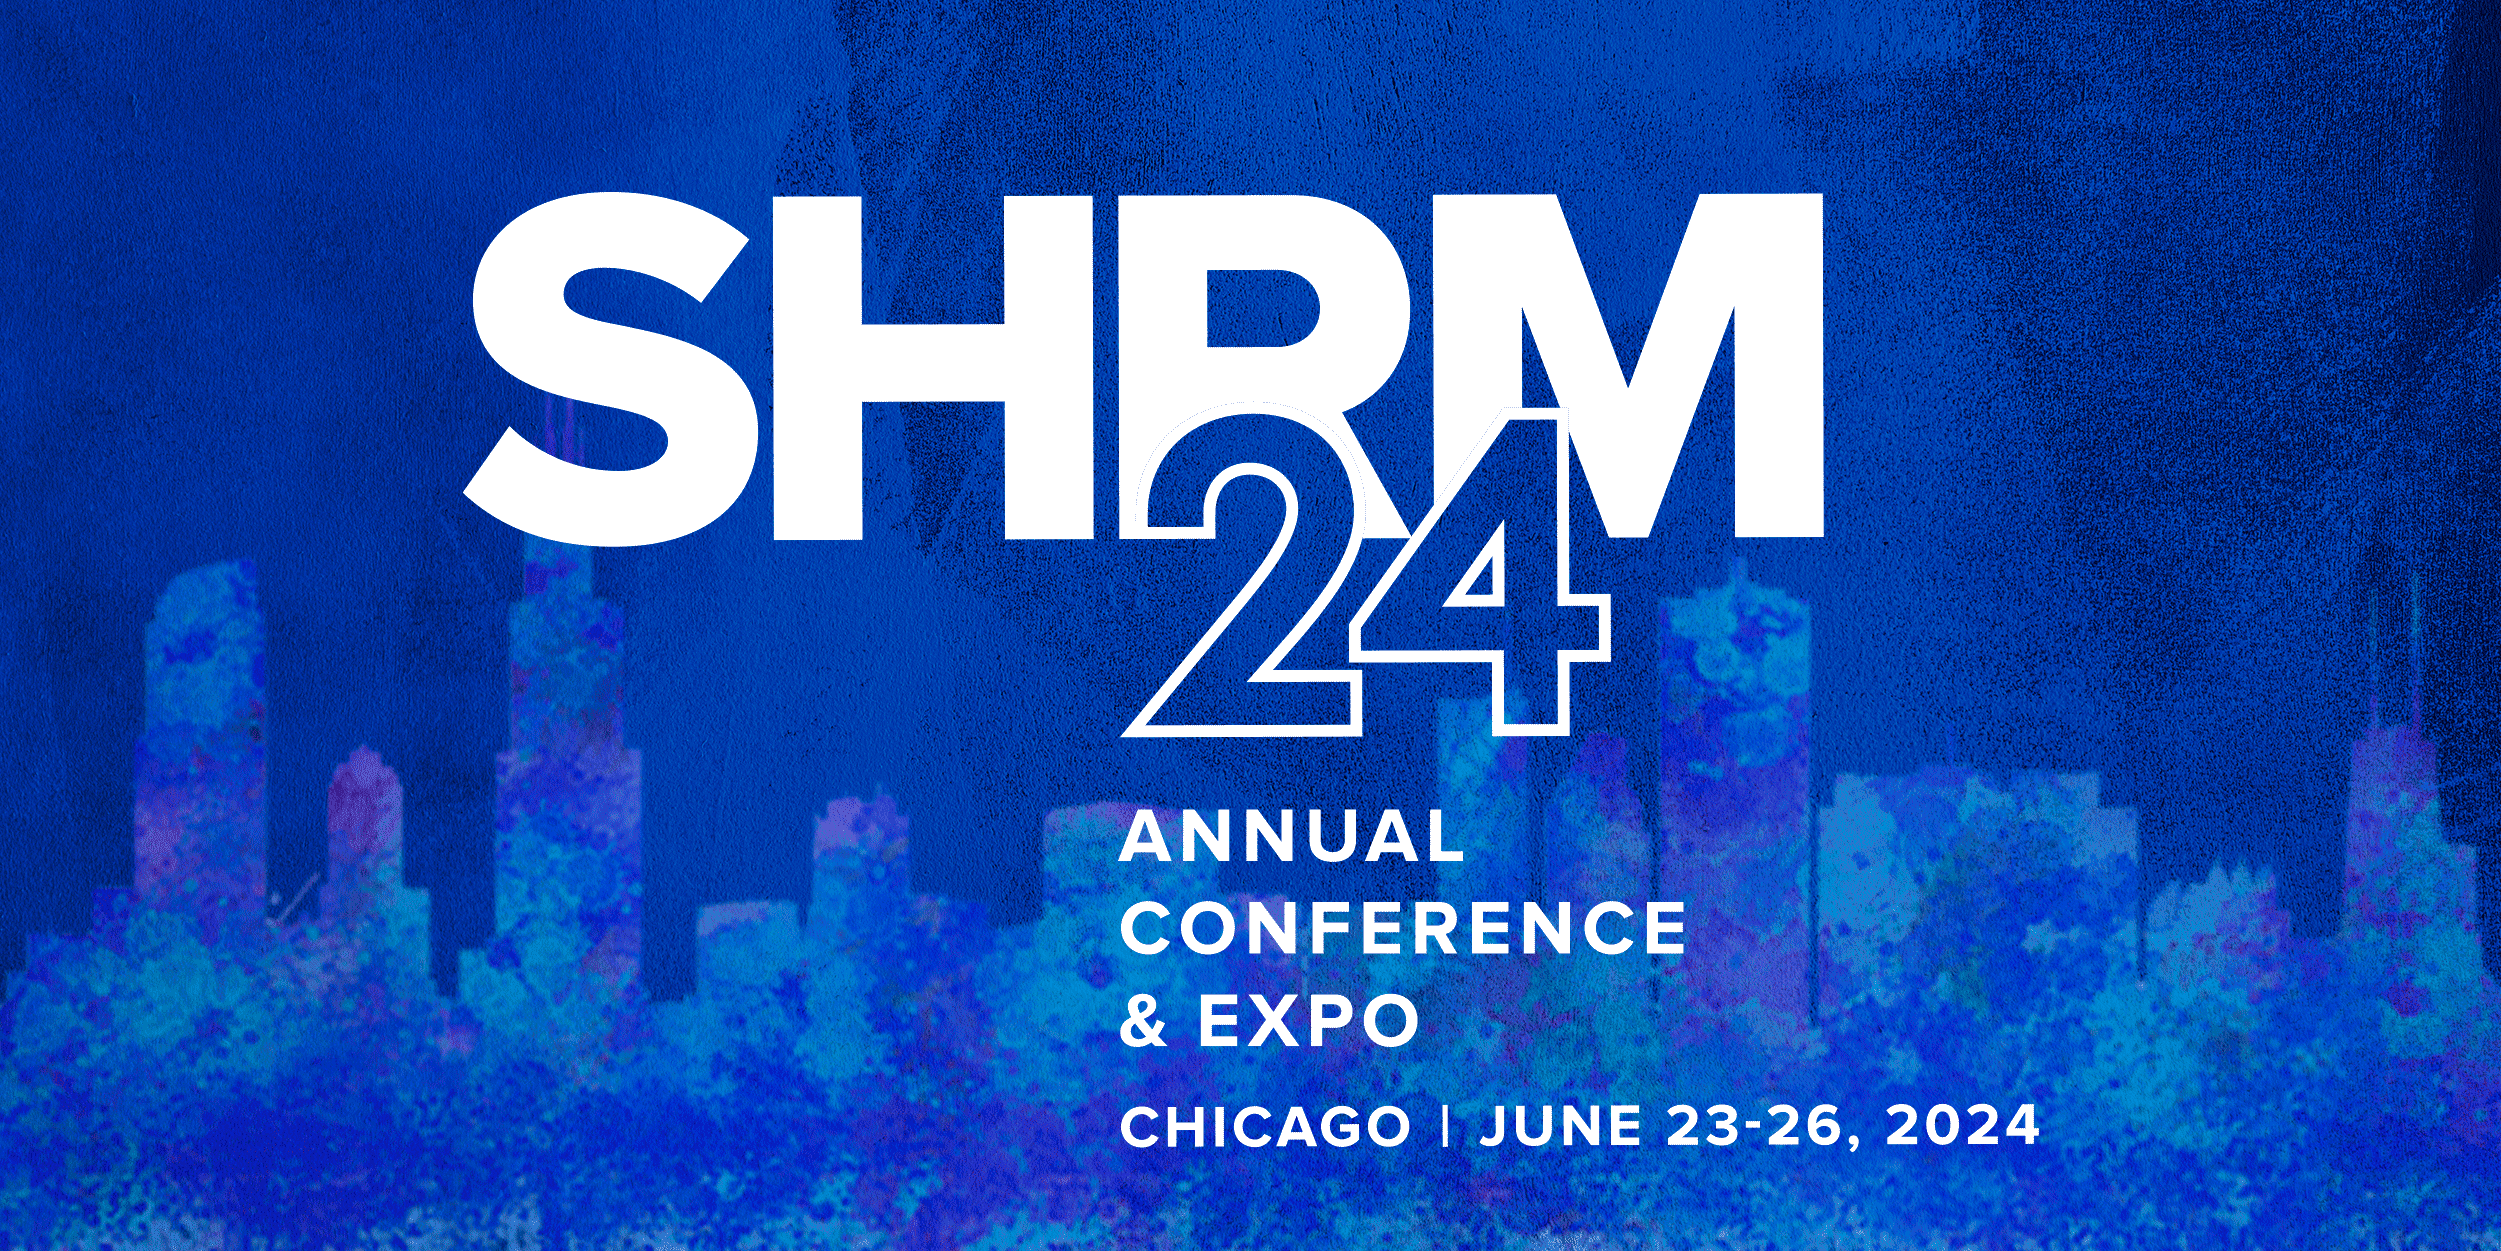 SHRM Announces HR Executive Tim Sackett as SHRM Talent Conference